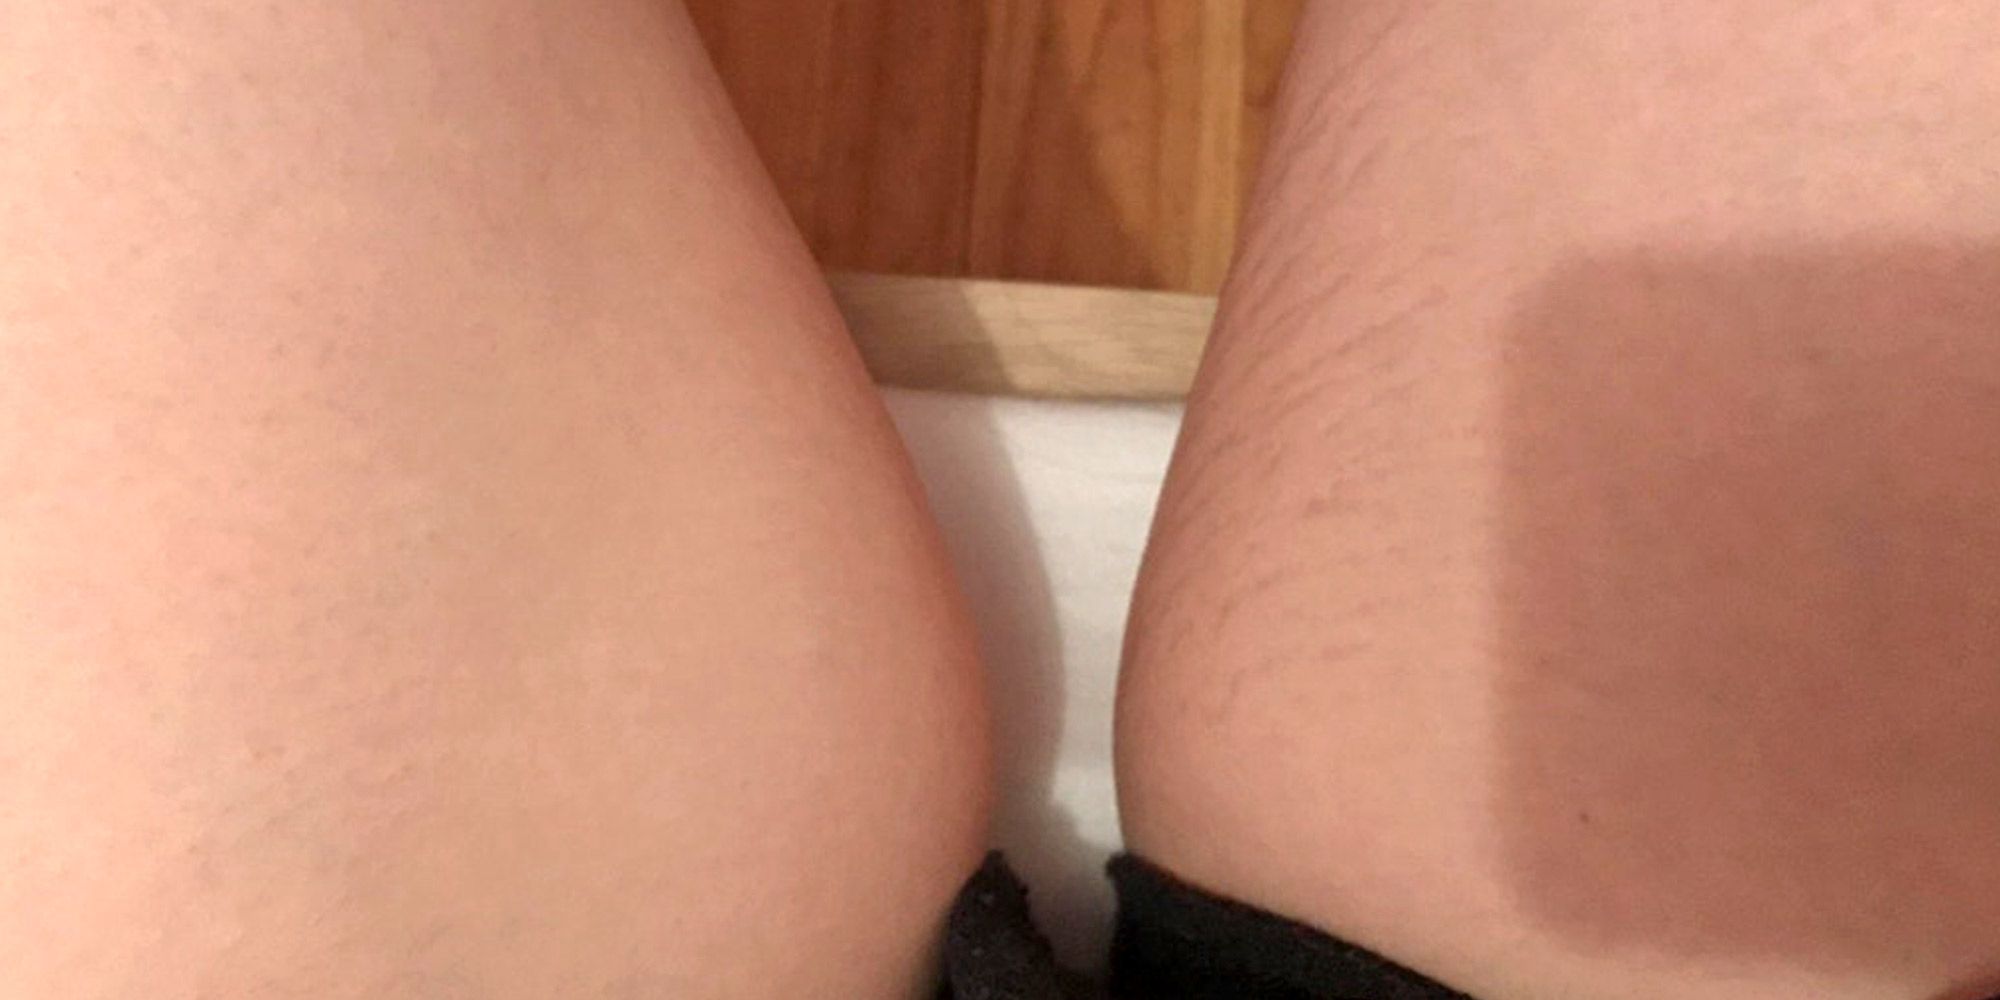 Stretch marks on thighs porn